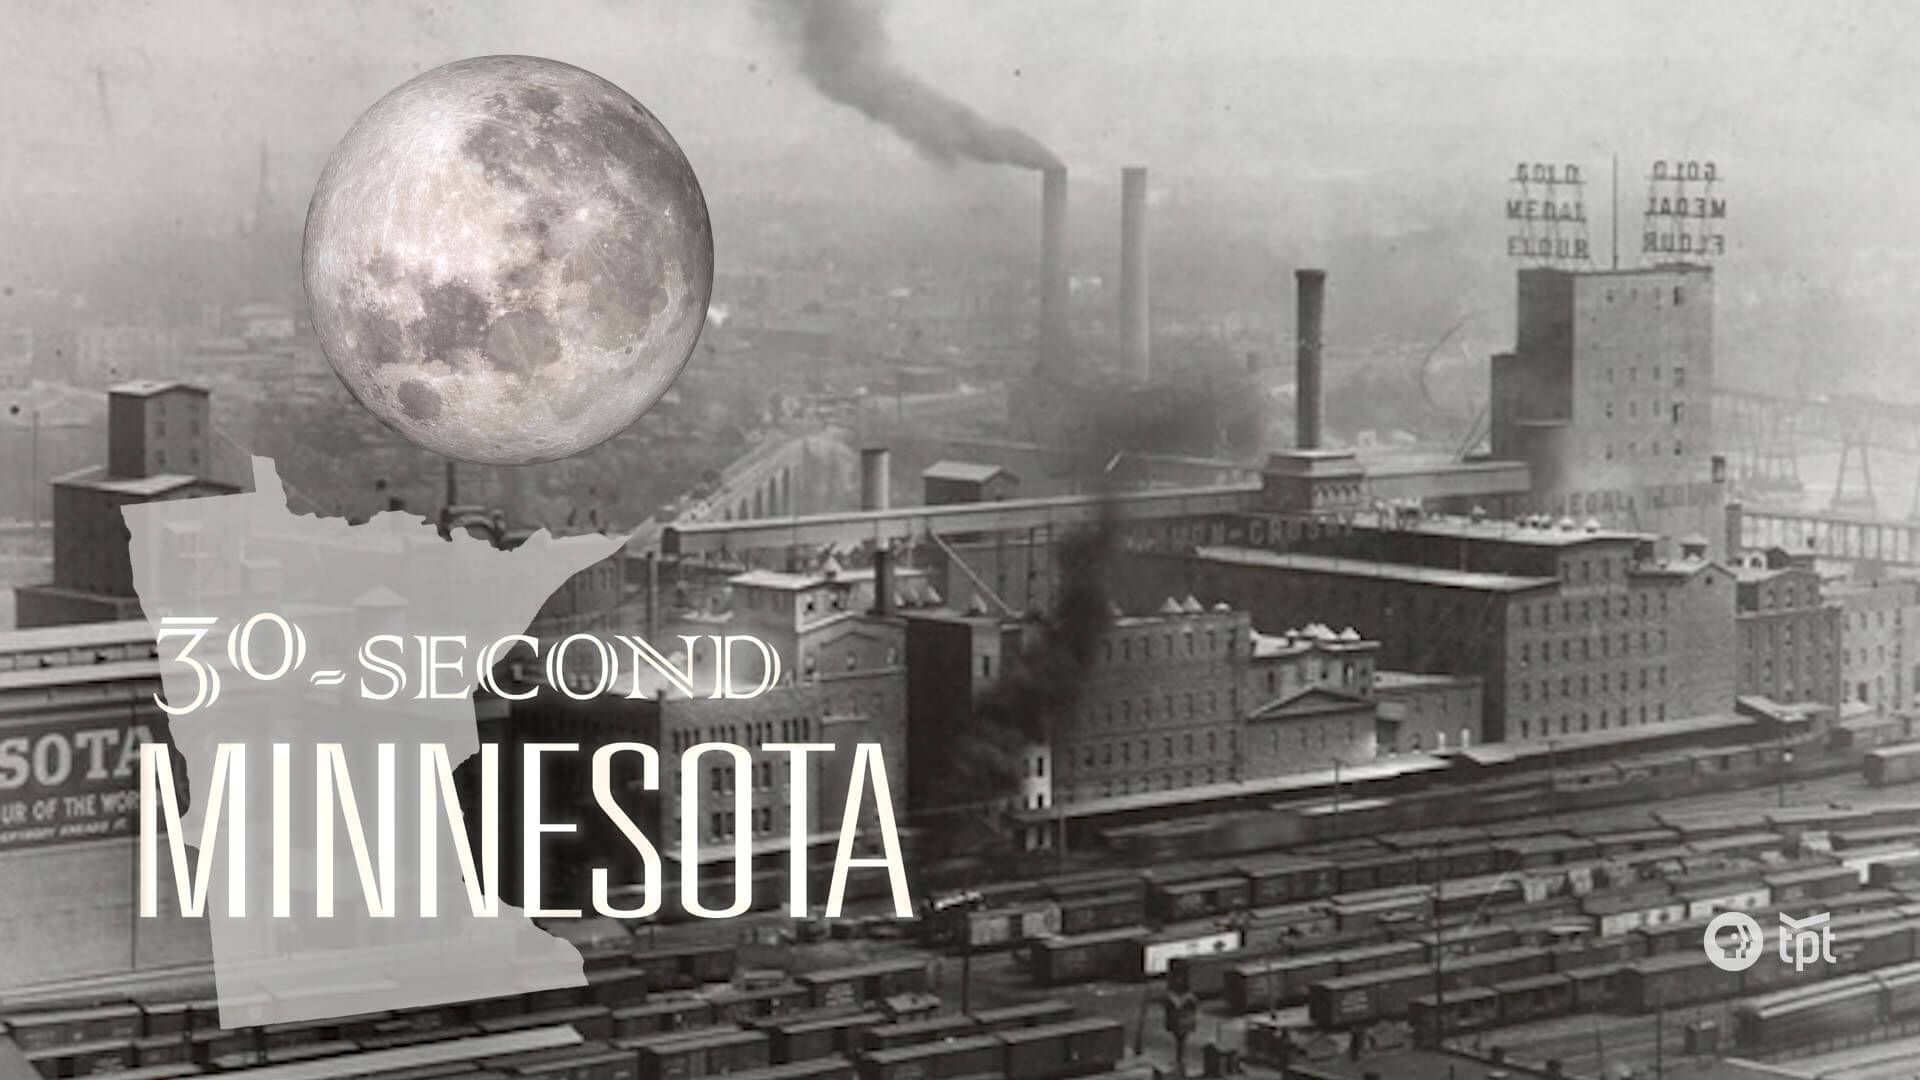 30-Second Minnesota: When Minneapolis Had an Artificial Moon